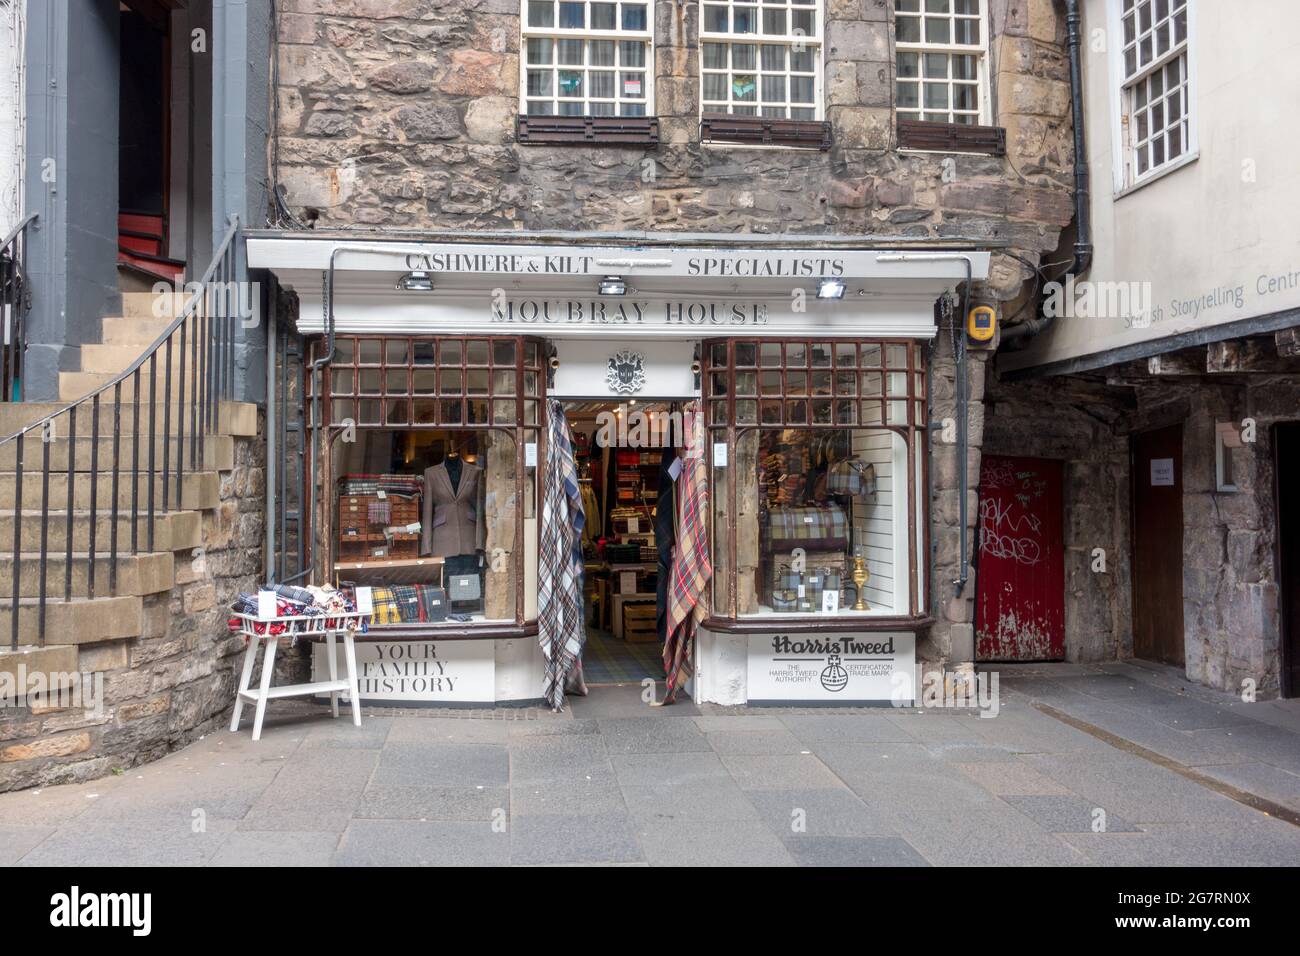 Moubray House Kilt And Cashmere Shop The Golden Mile Edinburgh Old Town Scotland Stock Photo